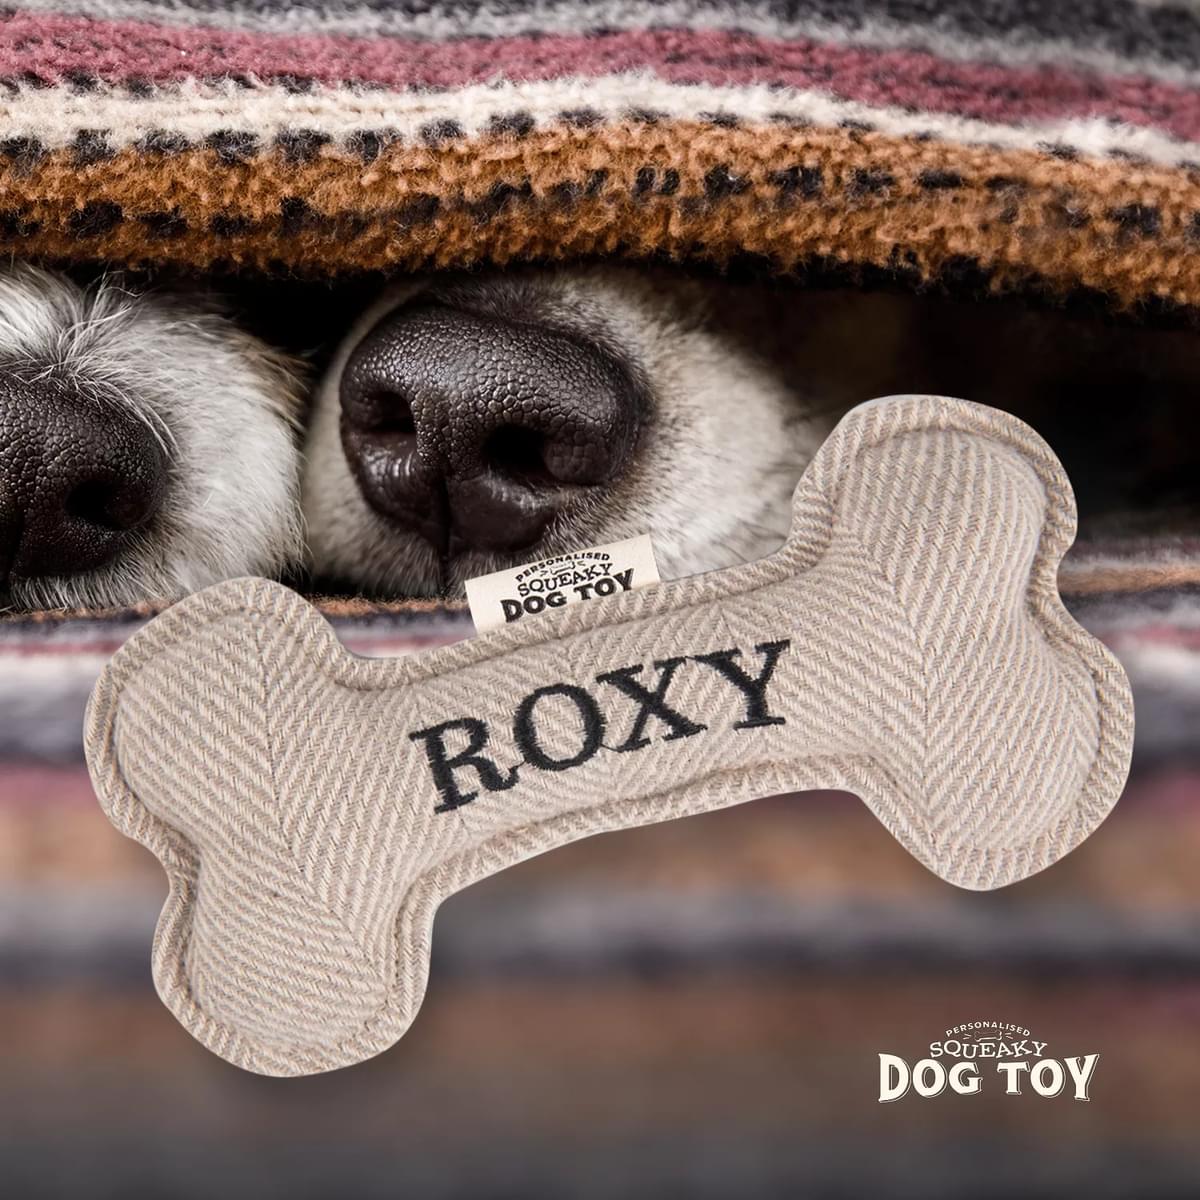 Named Squeaky Dog Toy- Roxy. Bone shaped herringbone tweed pattern dog toy. 